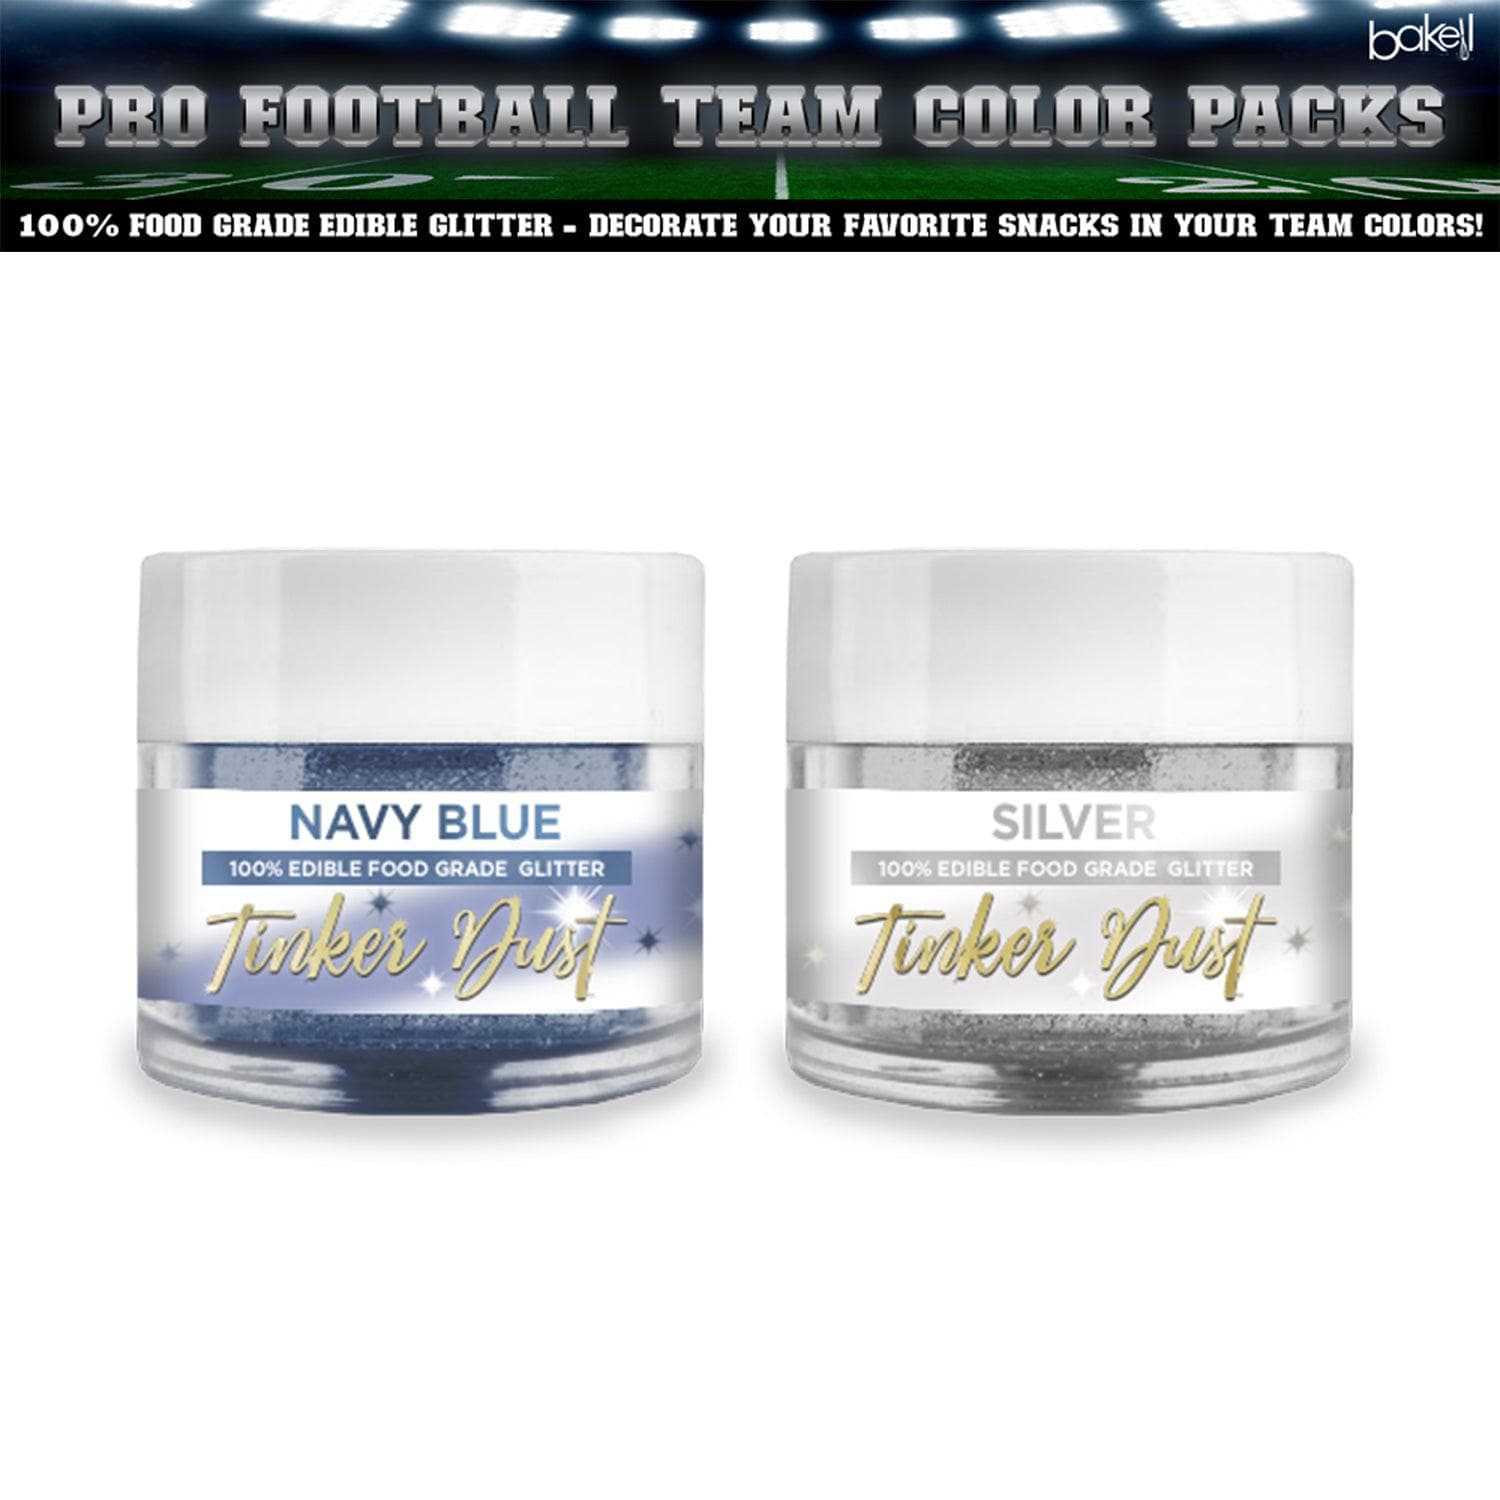 Buy Navy Blue & Silver Glitter - Save 15% Cowboys SuperBowl - Bakell